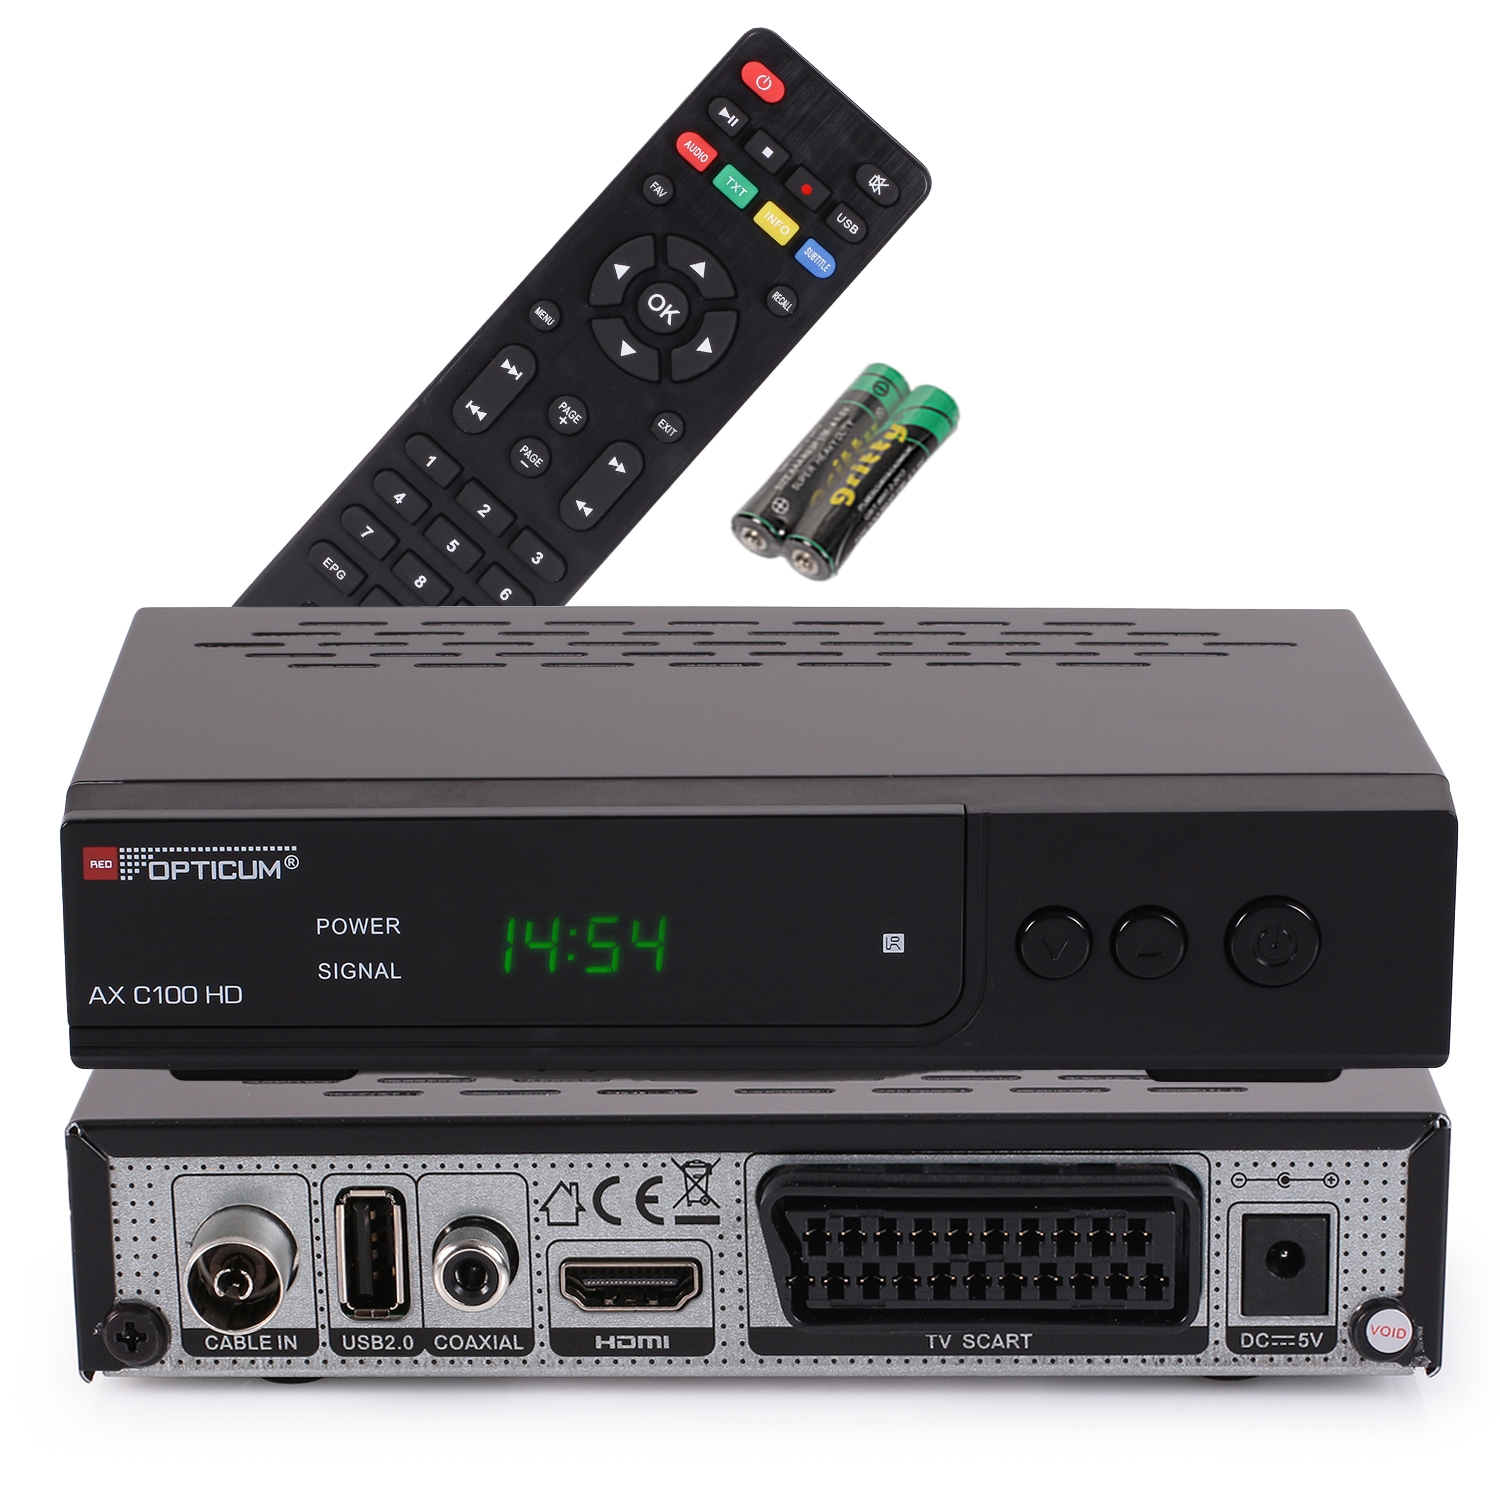 RED OPTICUM AX schwarz) HD- EPG-HDMI-USB Kabelreceiver C100 PVR-Aufnahmefunktion HD (HDTV, DVB-C2, DVB-C, Receiver Digitaler PVR-Funktion, -SCART DVB-C mit Kabel-Receiver I